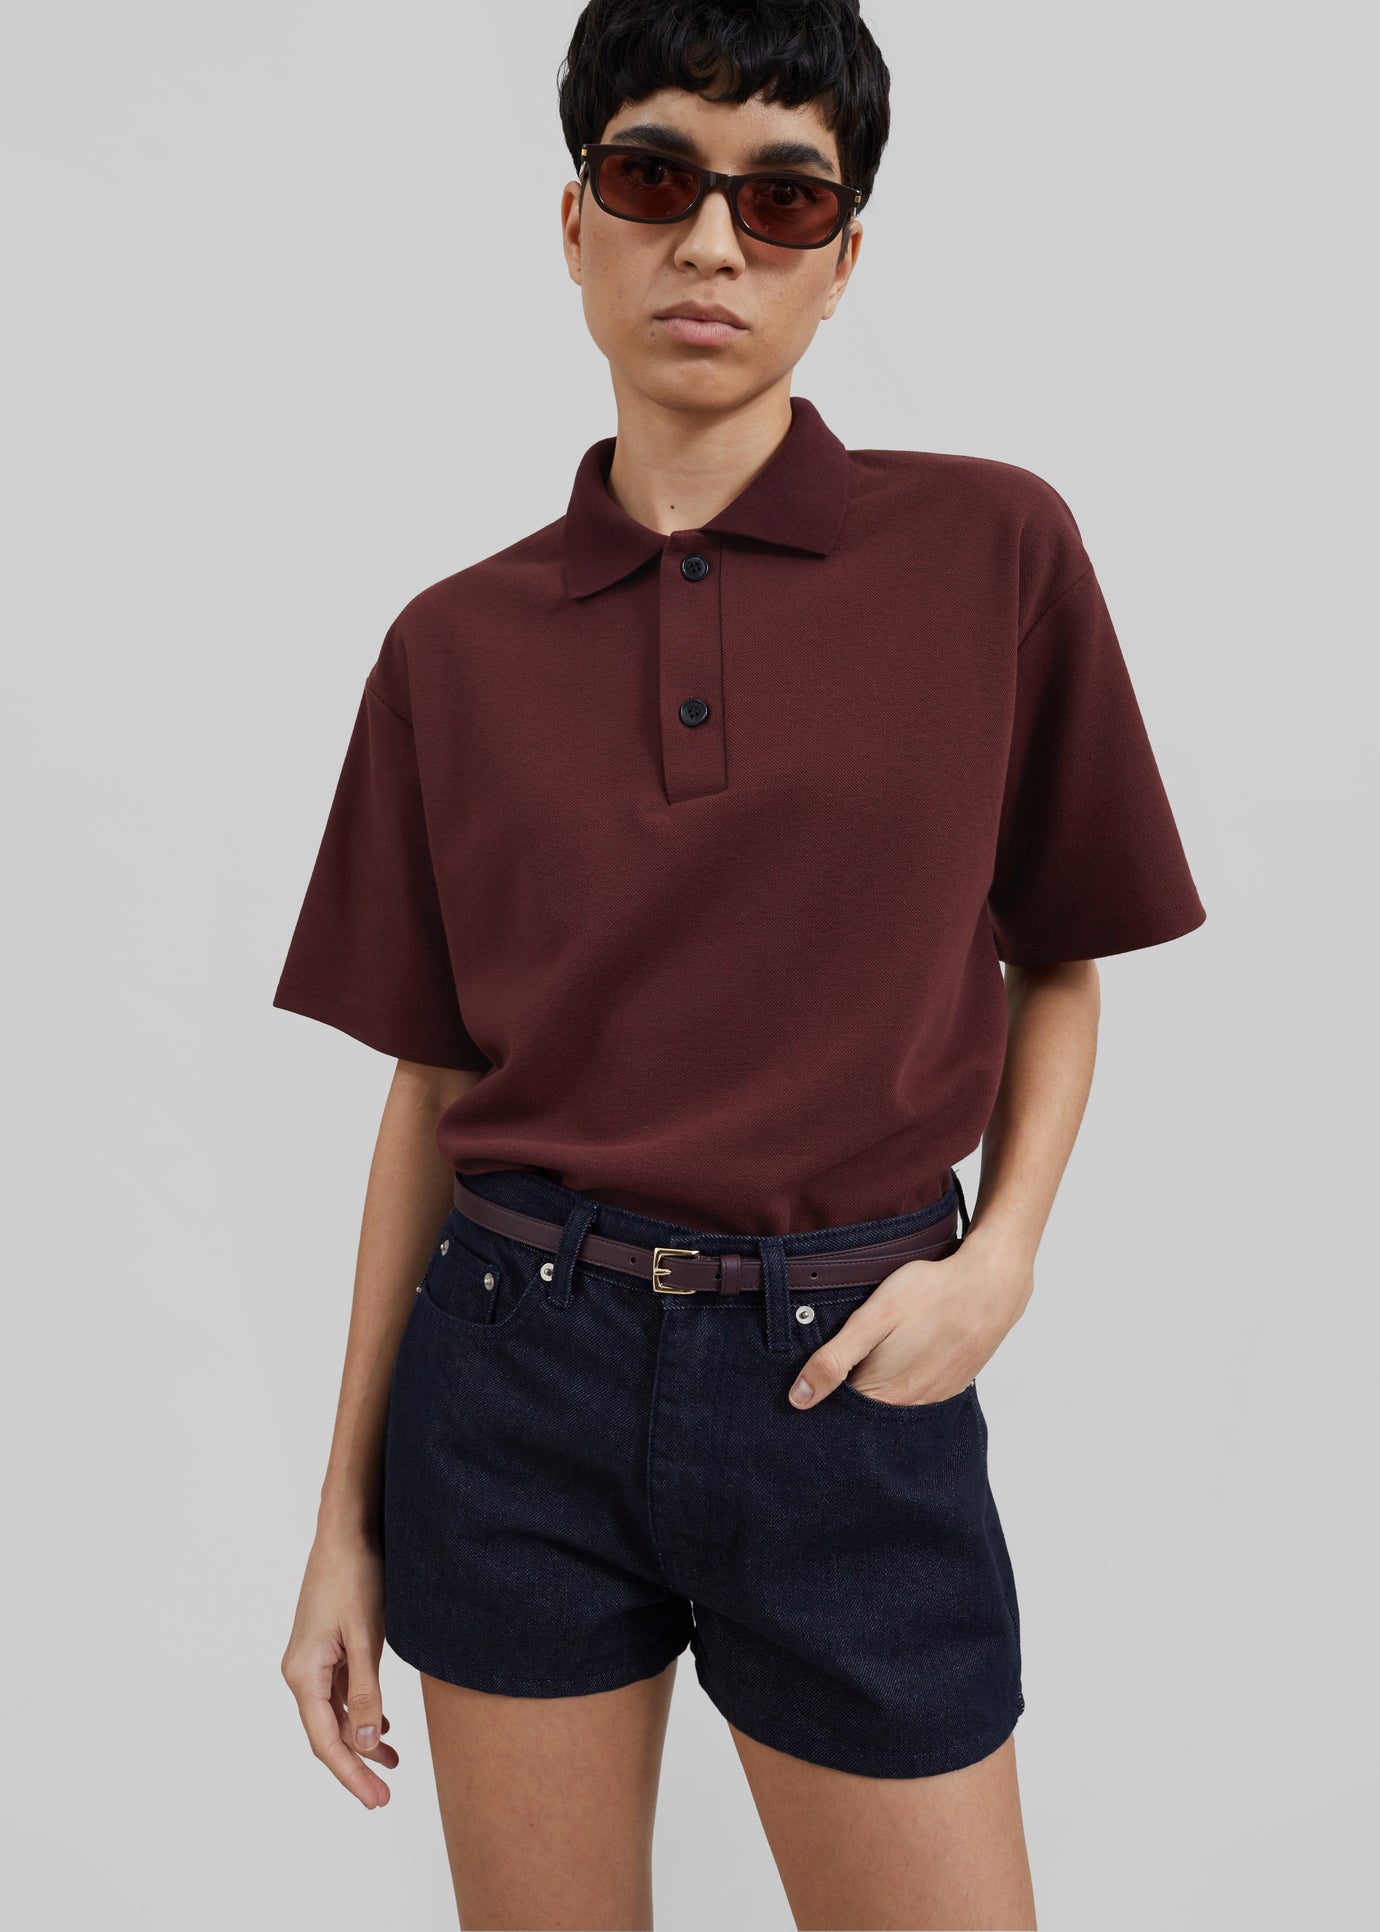 Dianne Polo Shirt - Burgundy - 1